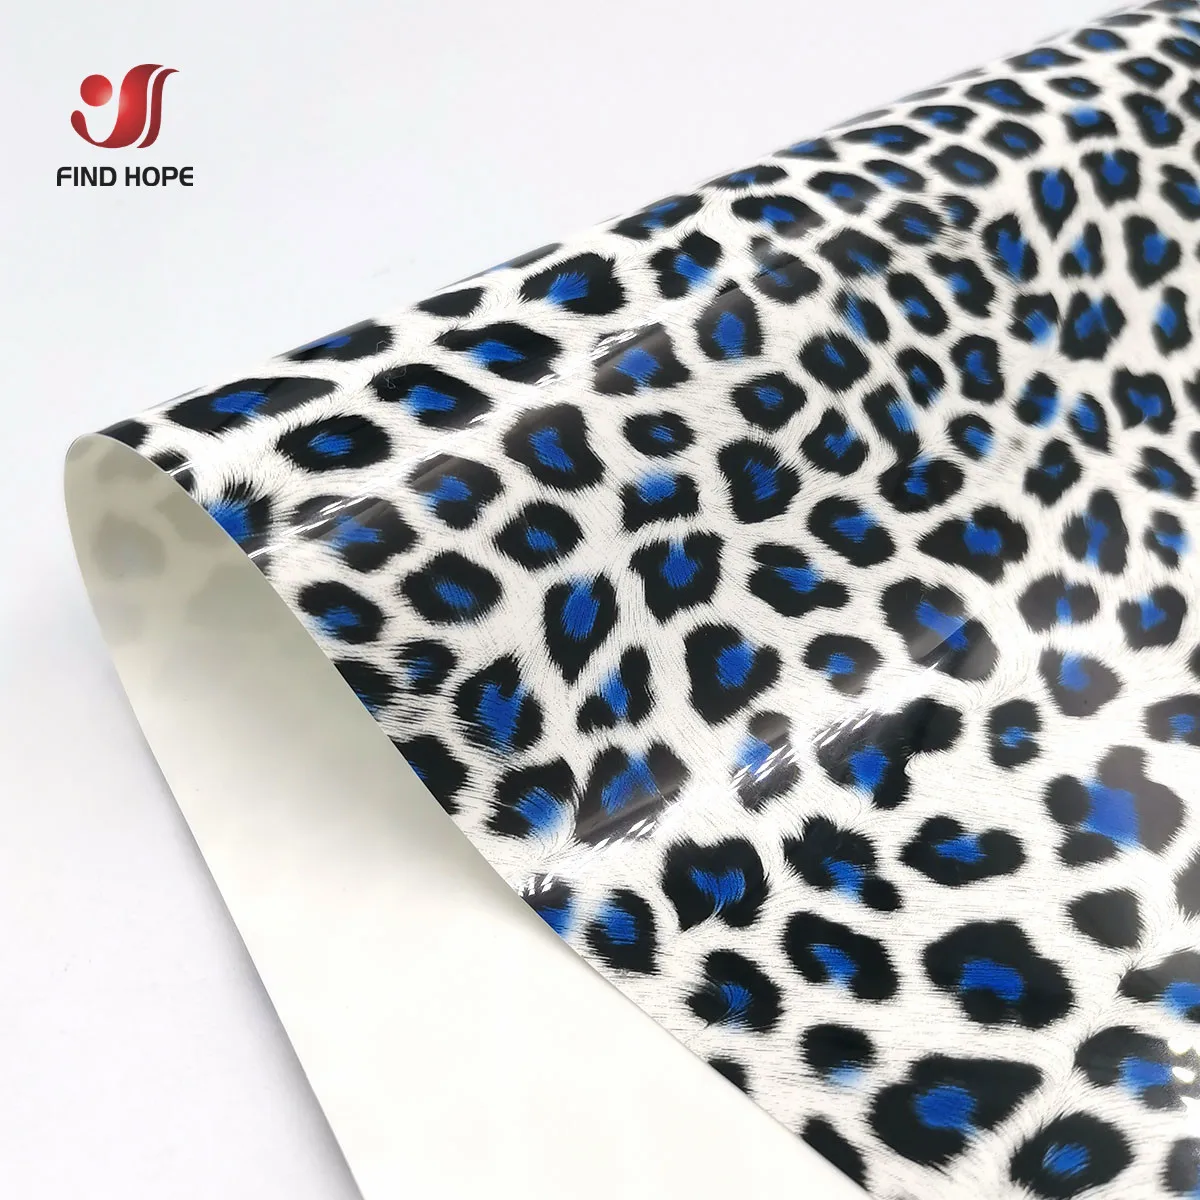 HTV4U Puff Animal Patterned Heat Transfer Vinyl (Leopard Tan, 20 x 1 Yard)  - 3D Printed Heat Press Transfer Paper, Iron on Vinyl for T-Shirt, Fabric